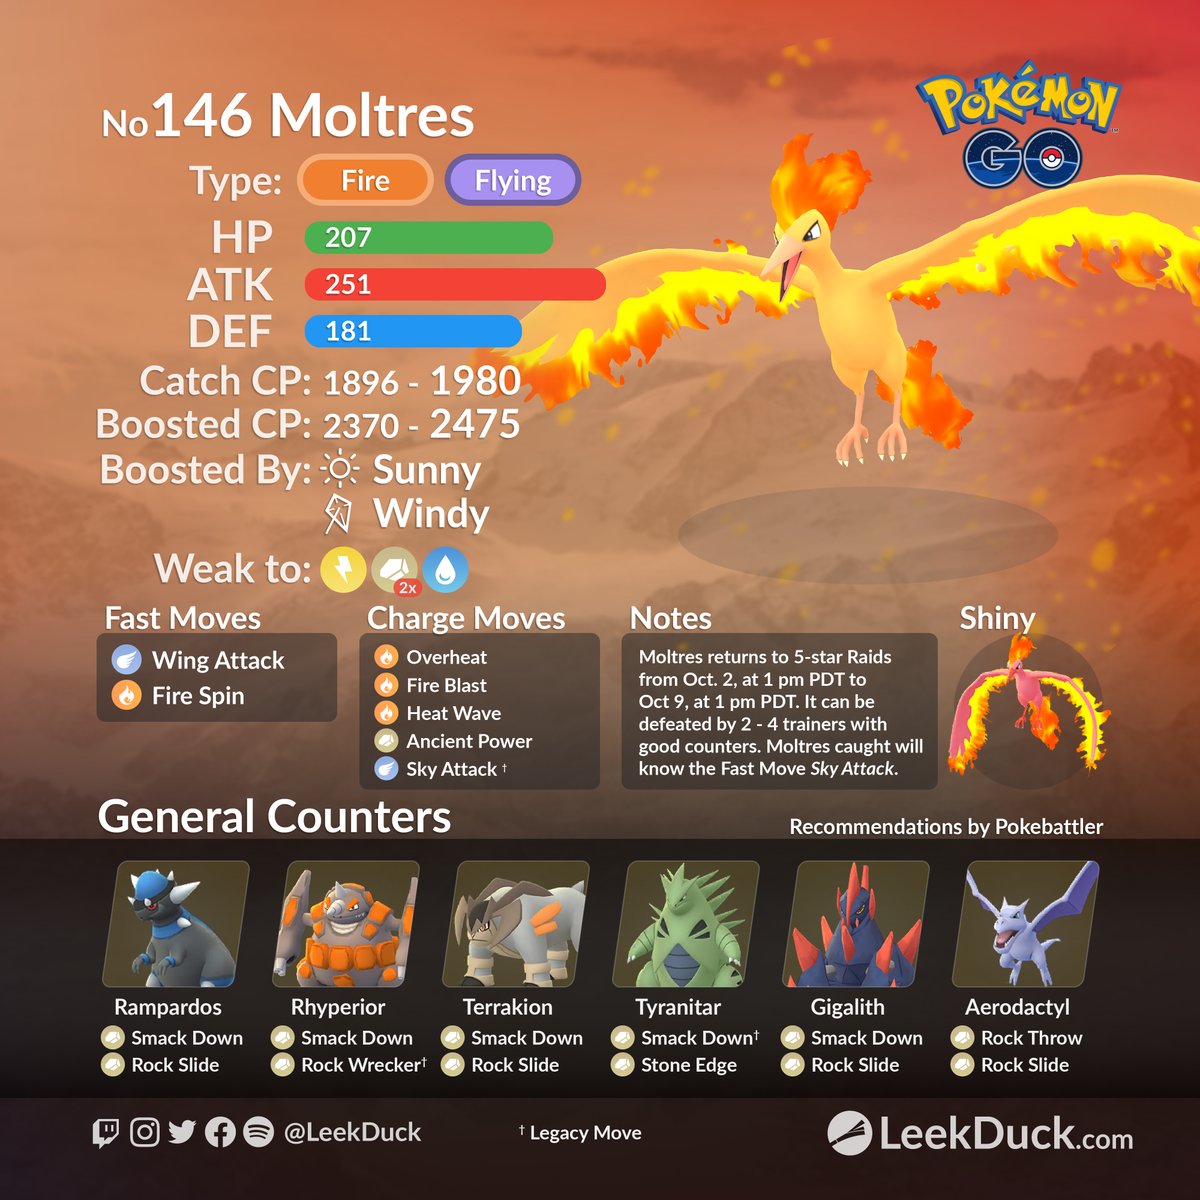 Track Pokémon GO Events: https://leekduck.com/events/ .